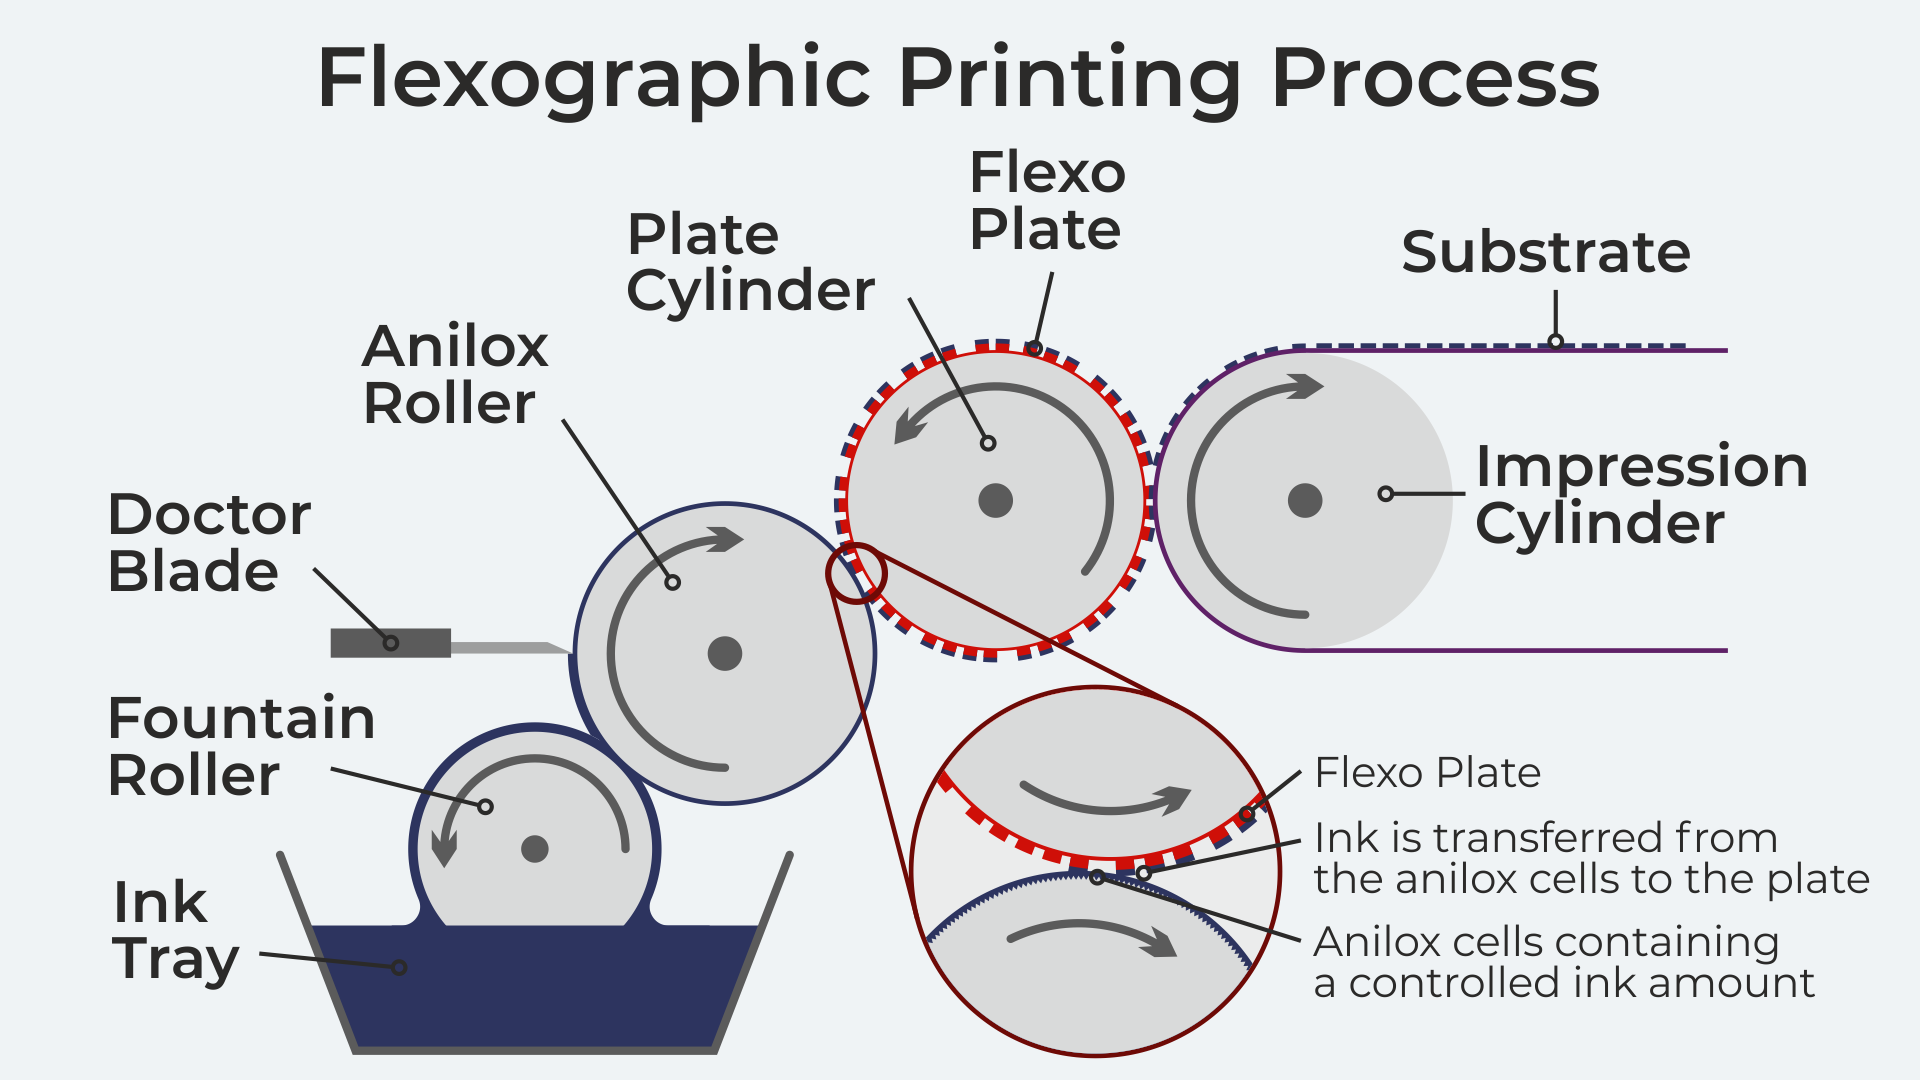 Flexographic printing process diamgram